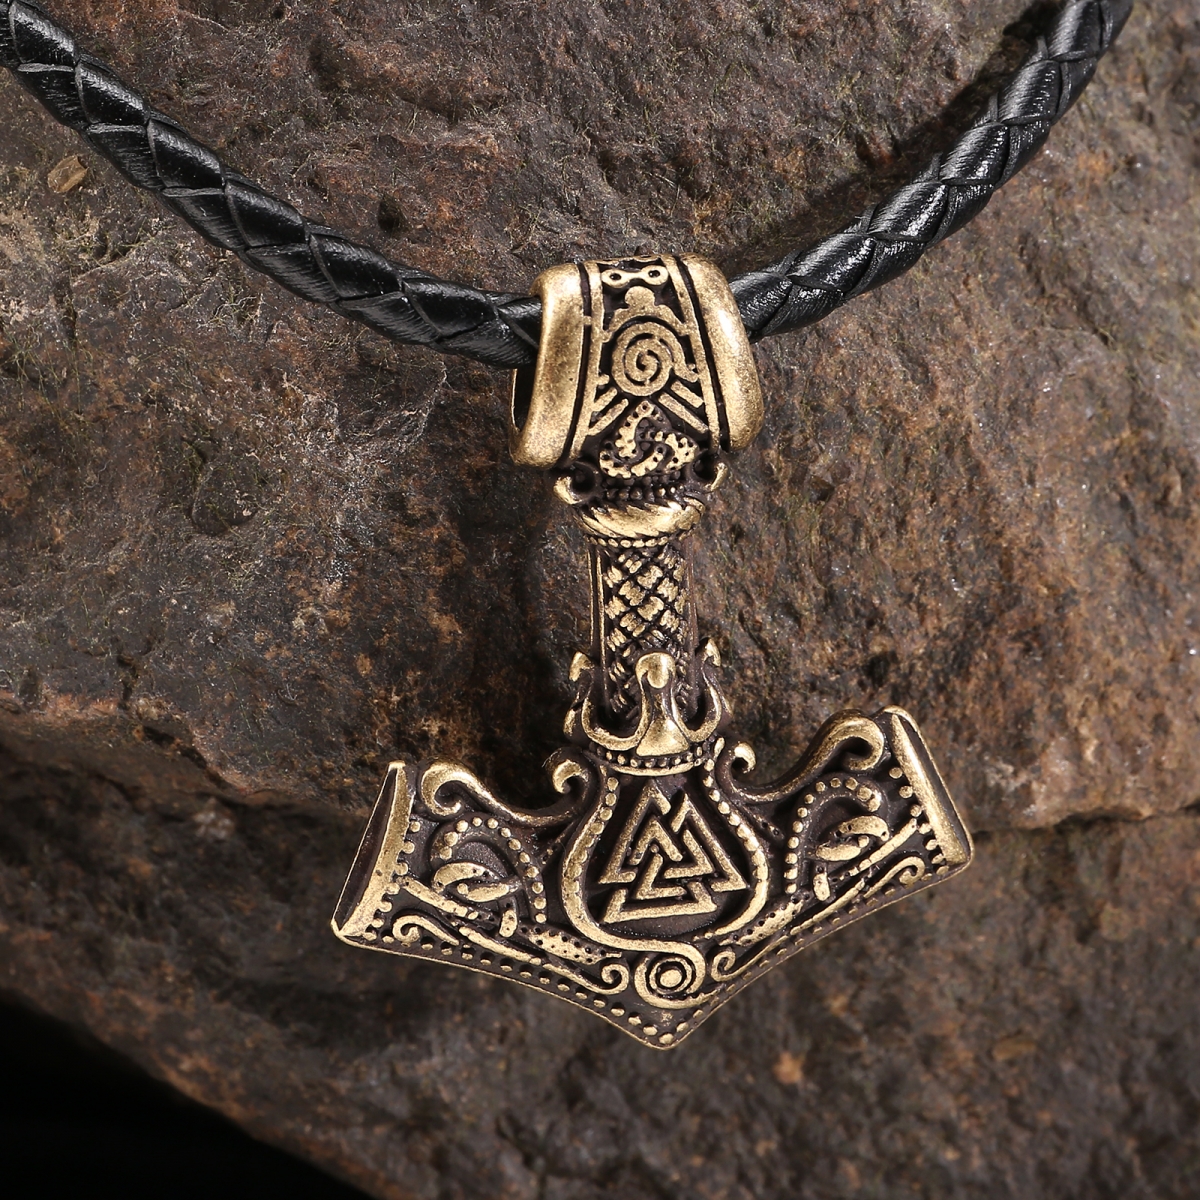 Vikings history-NORSECOLLECTION- Viking Jewelry,Viking Necklace,Viking Bracelet,Viking Rings,Viking Mugs,Viking Accessories,Viking Crafts